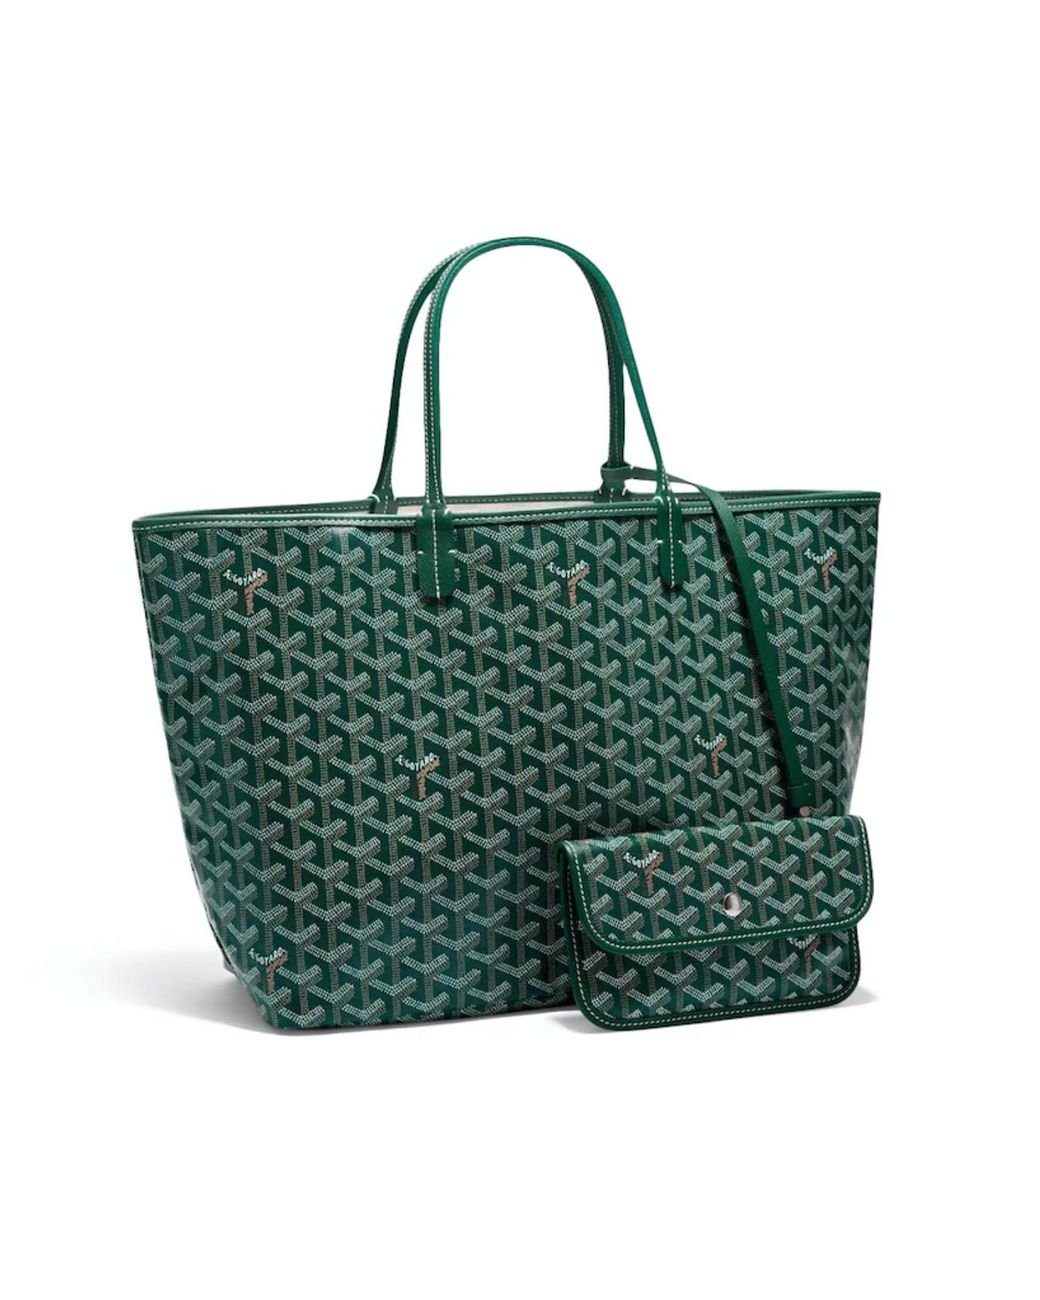 green goyard tote bag